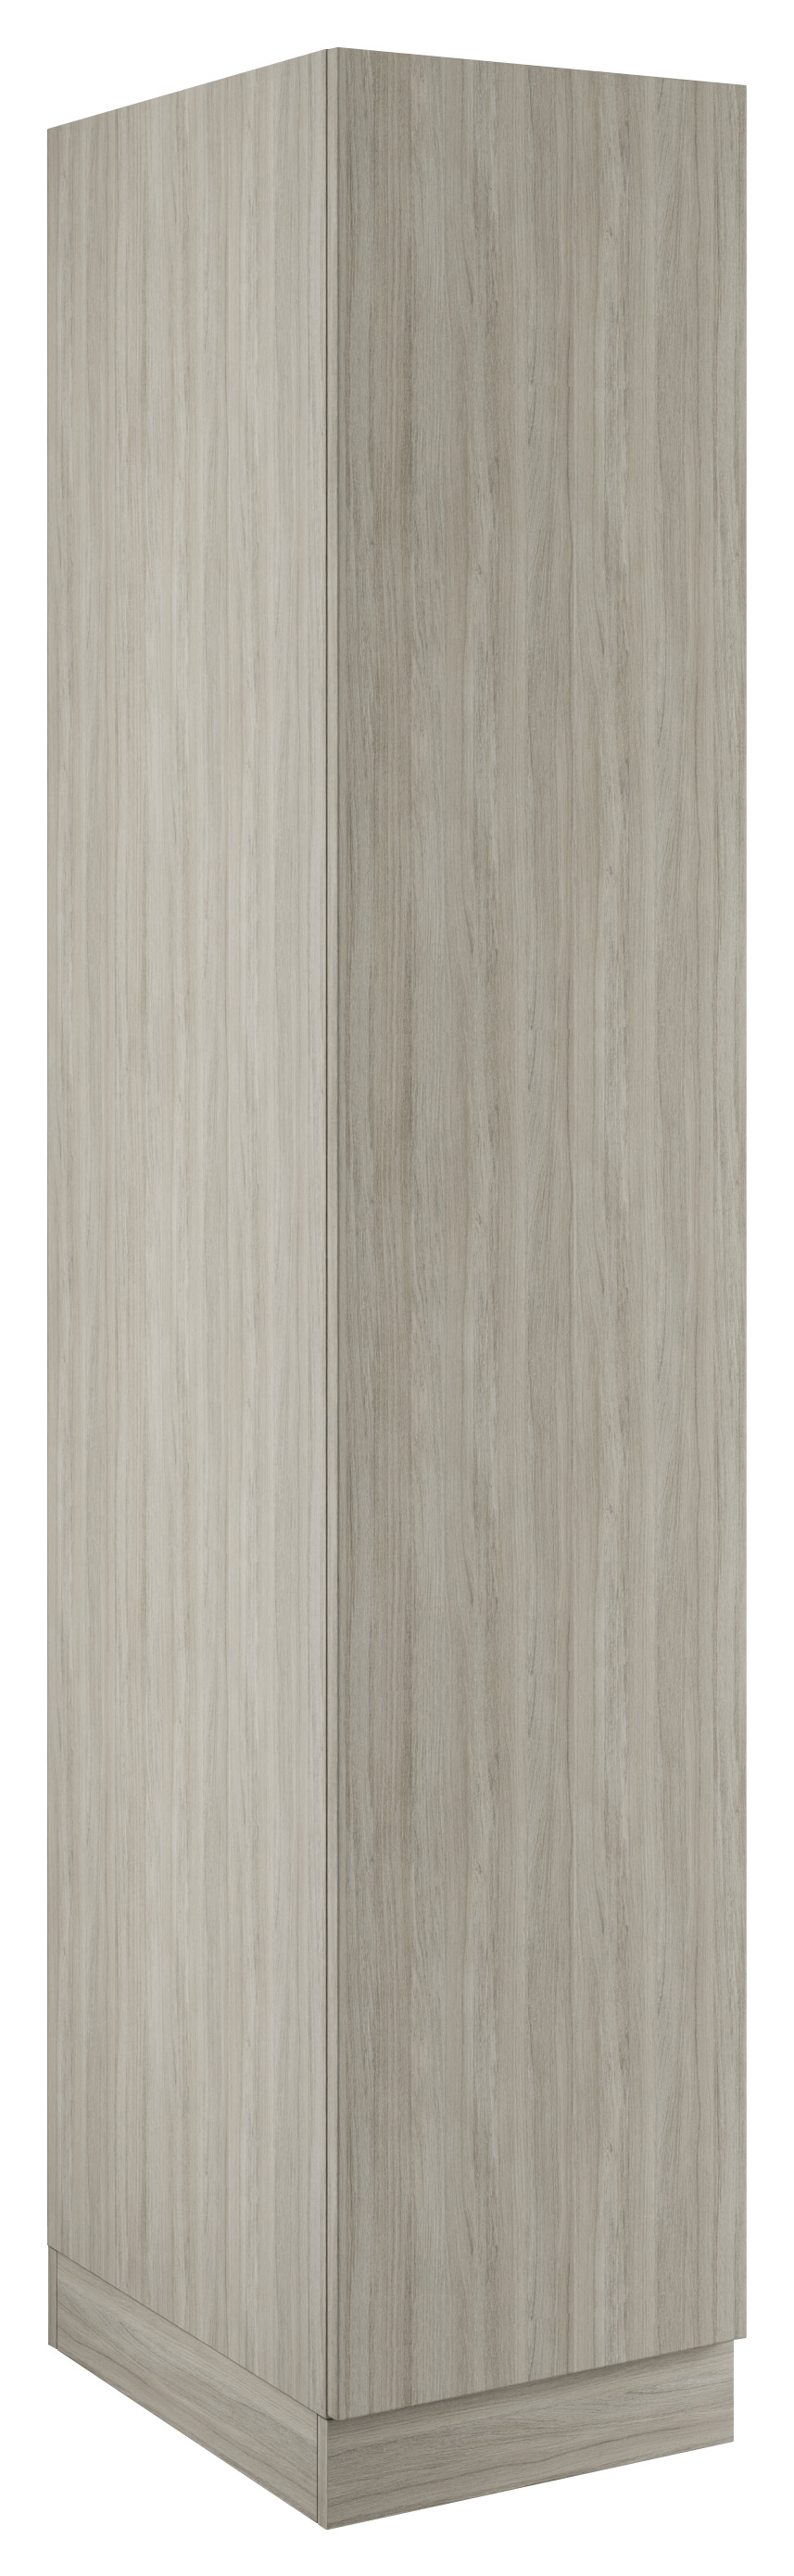 Malton Urban Oak Single Wardrobe with Shelves - 450 x 2260 x 608mm